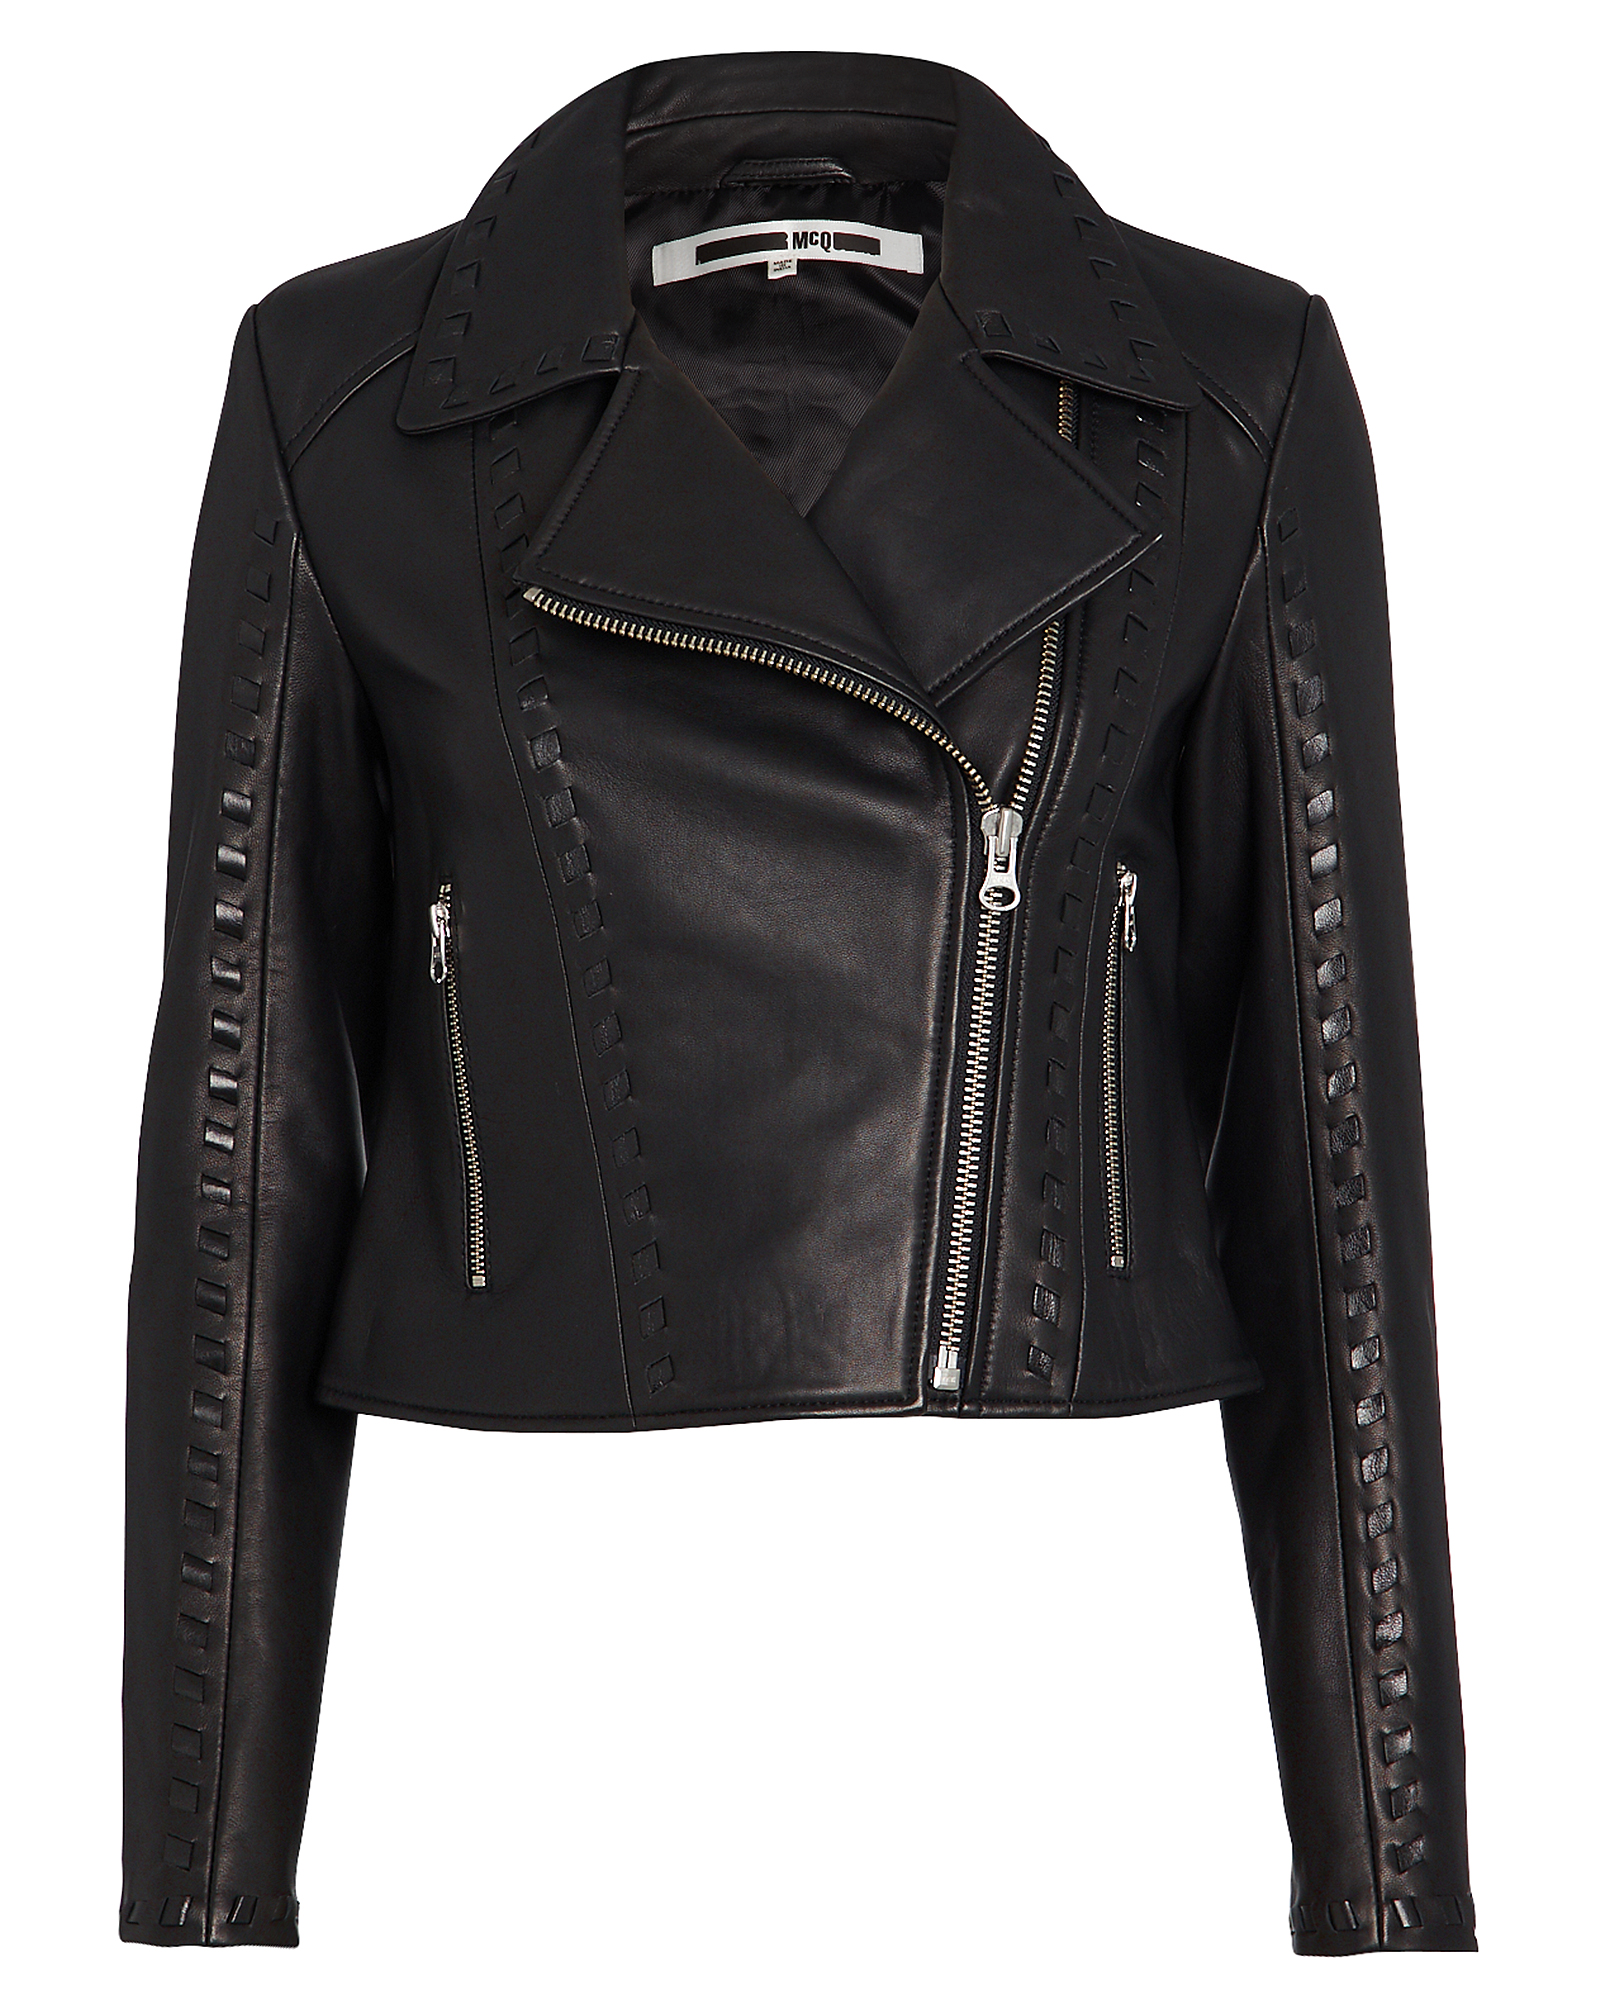 McQ by Alexander McQueen | Motoya Leather Biker Jacket | INTERMIX®